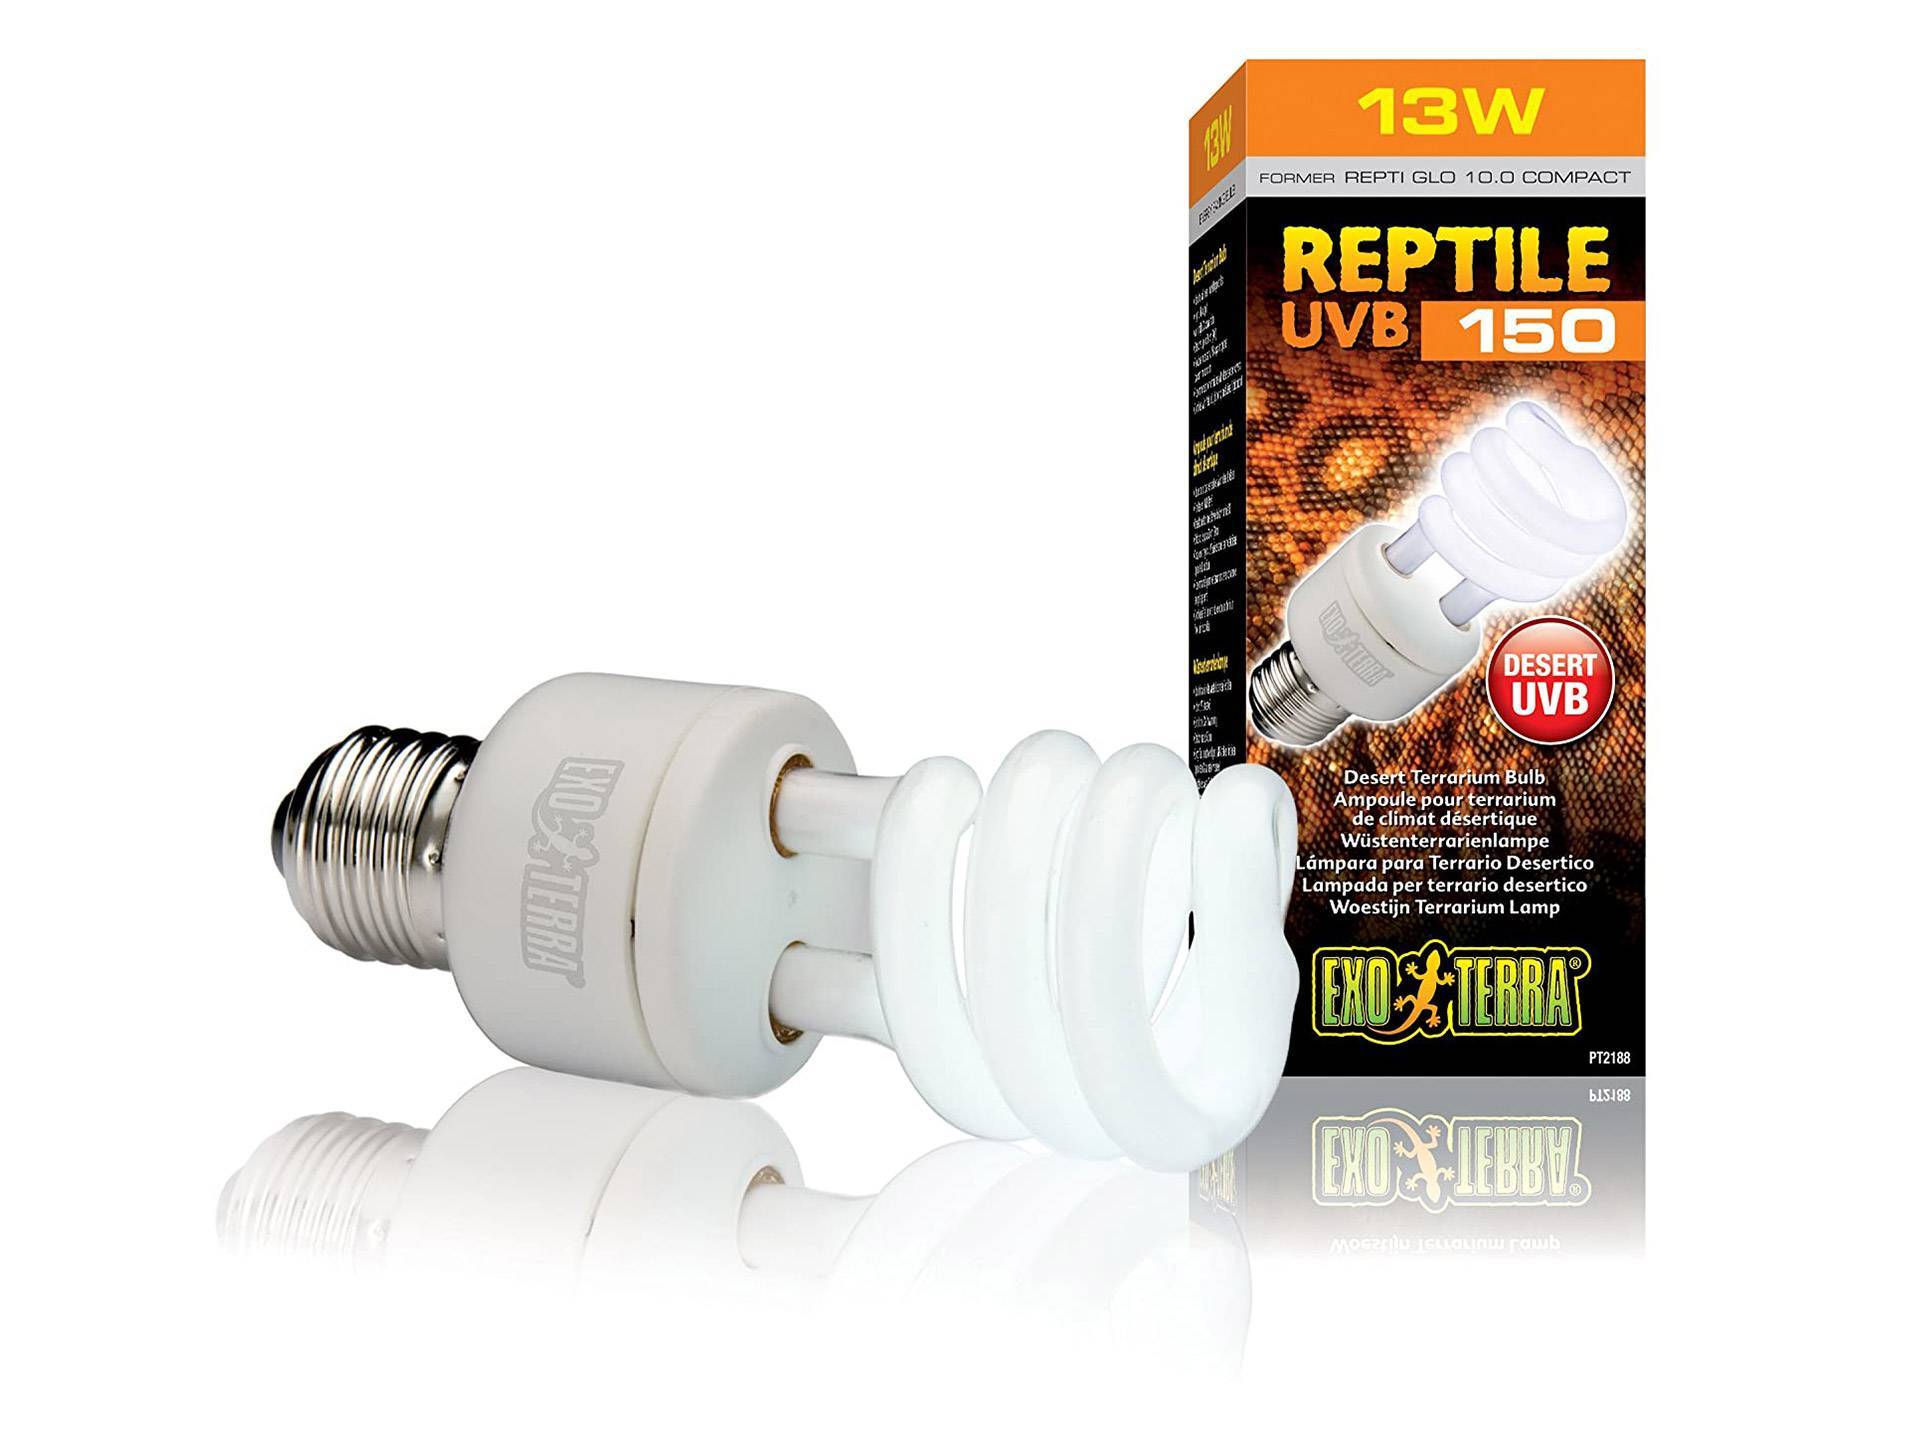 Ampoule UVB 10.0 pour tortue 13 watts Exo Terra Reptiglo quatrième